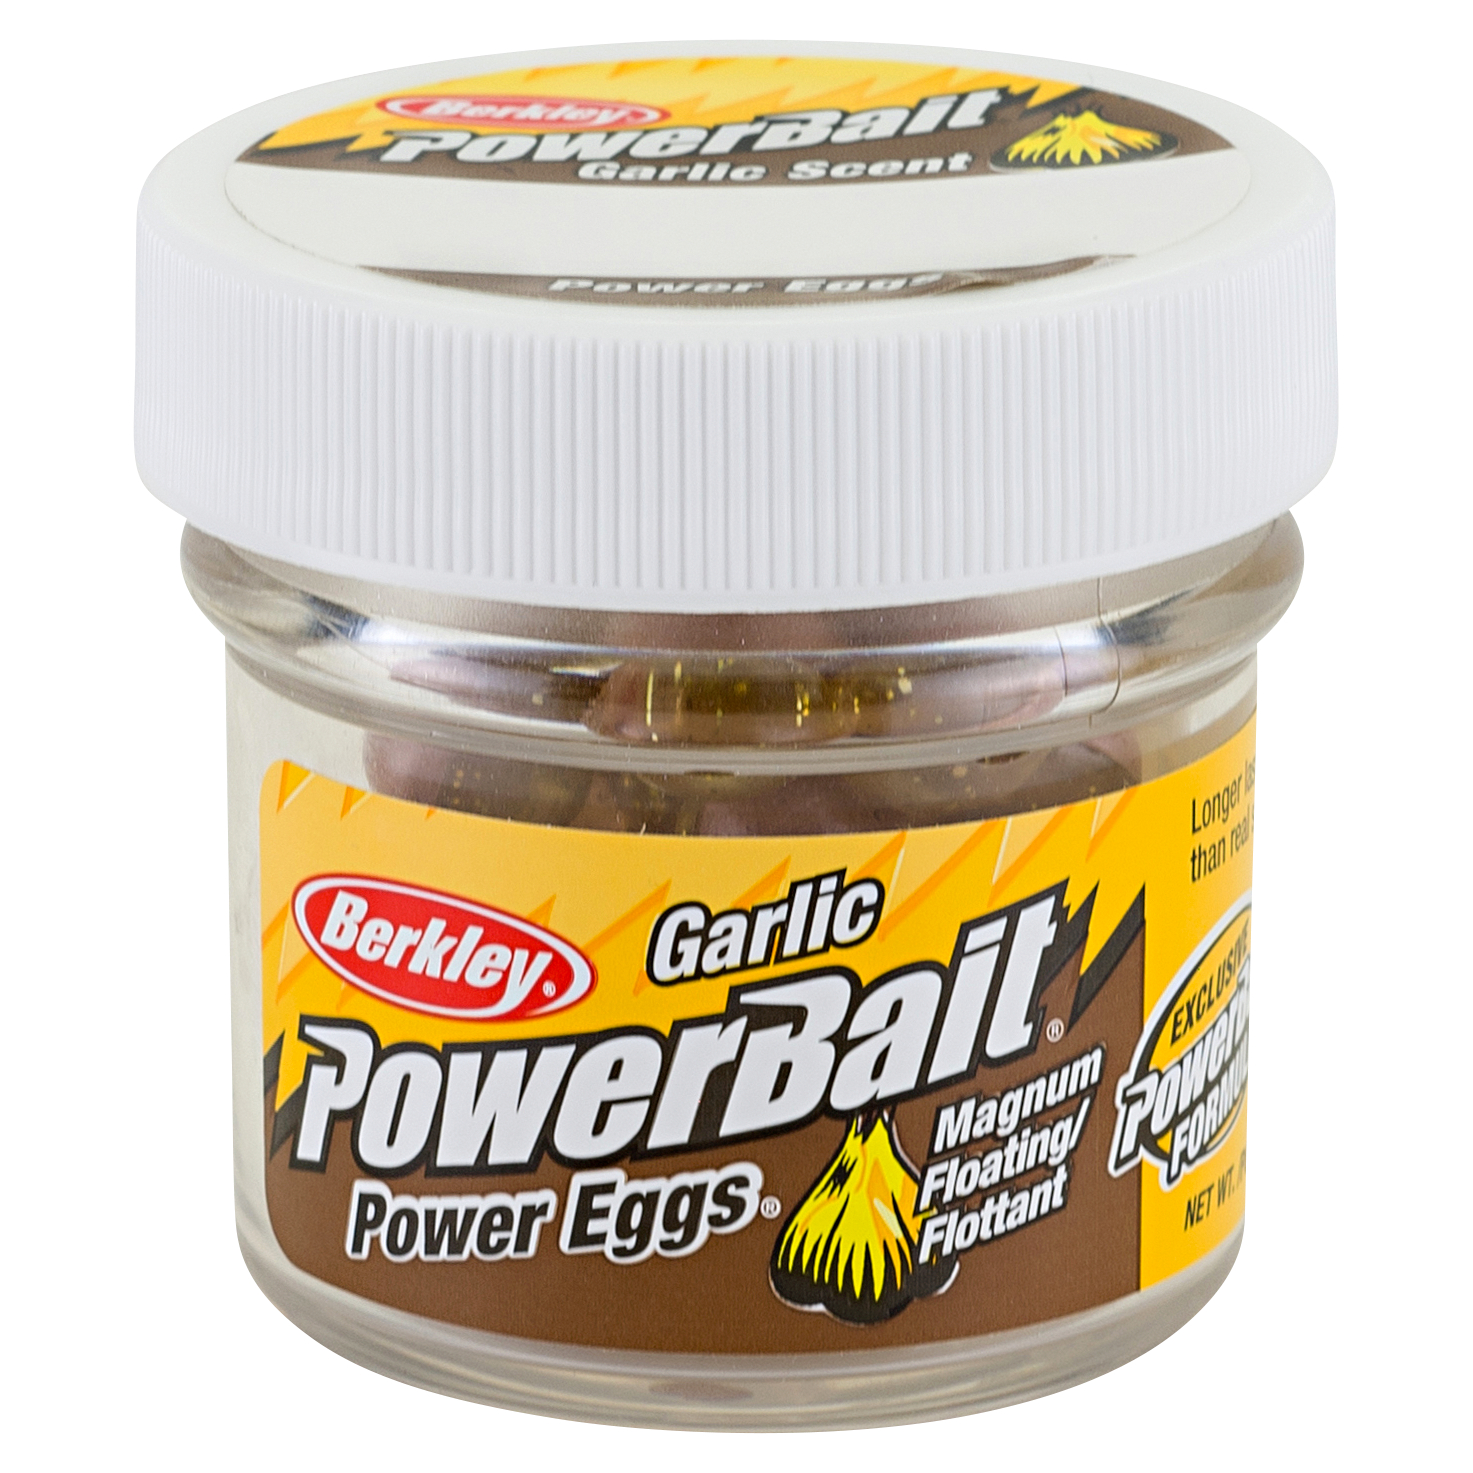 Berkley Powerbait Floating Eggs (Garlic natural) at low prices